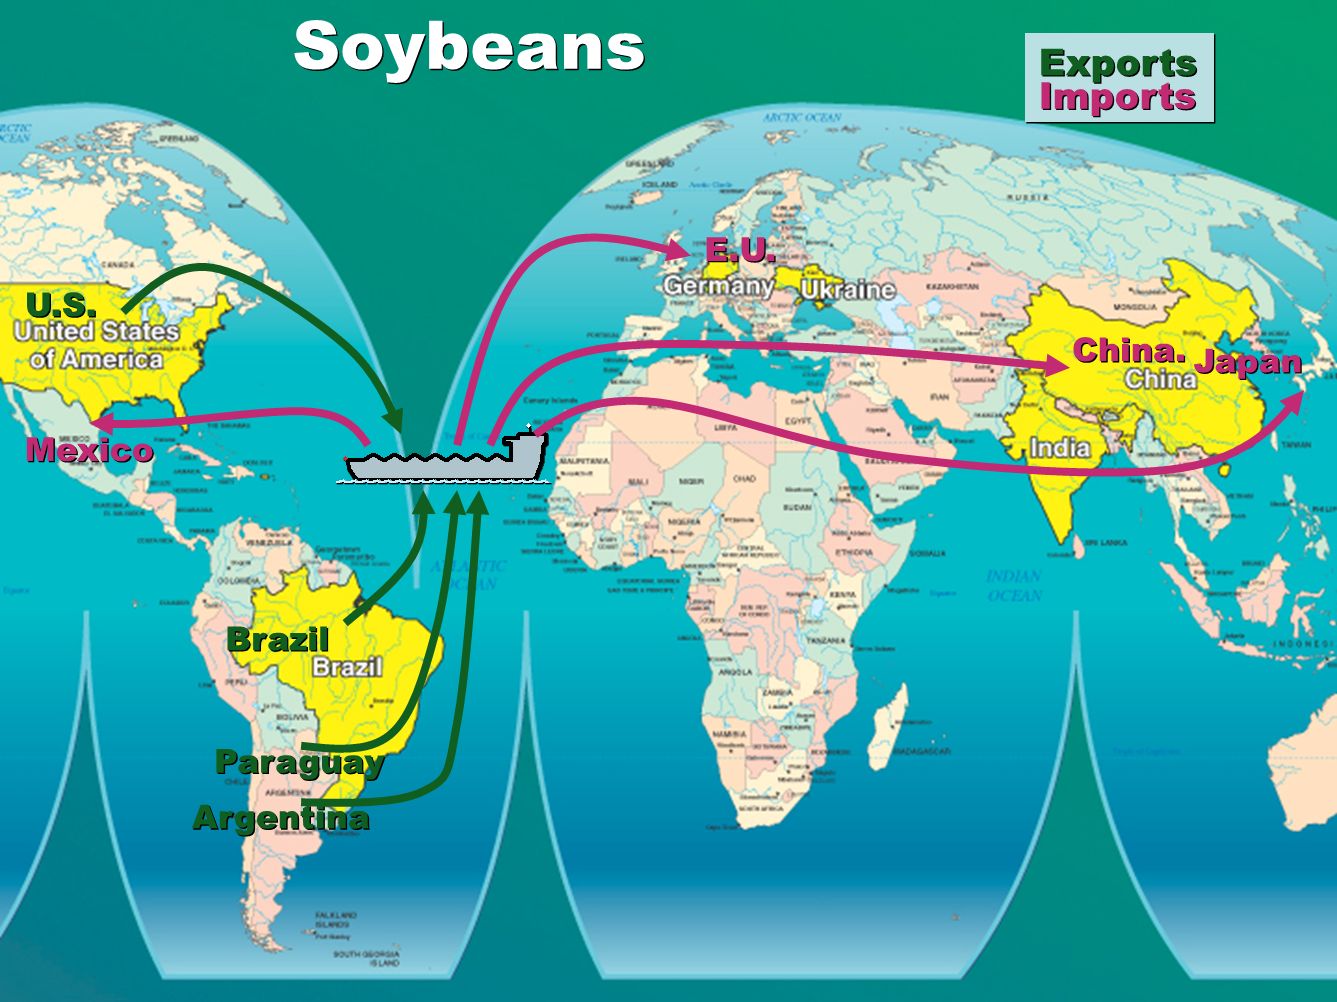 Soybeans Exports Imports U.S. E.U. Brazil Argentina Paraguay China. Japan Mexico Soybeans